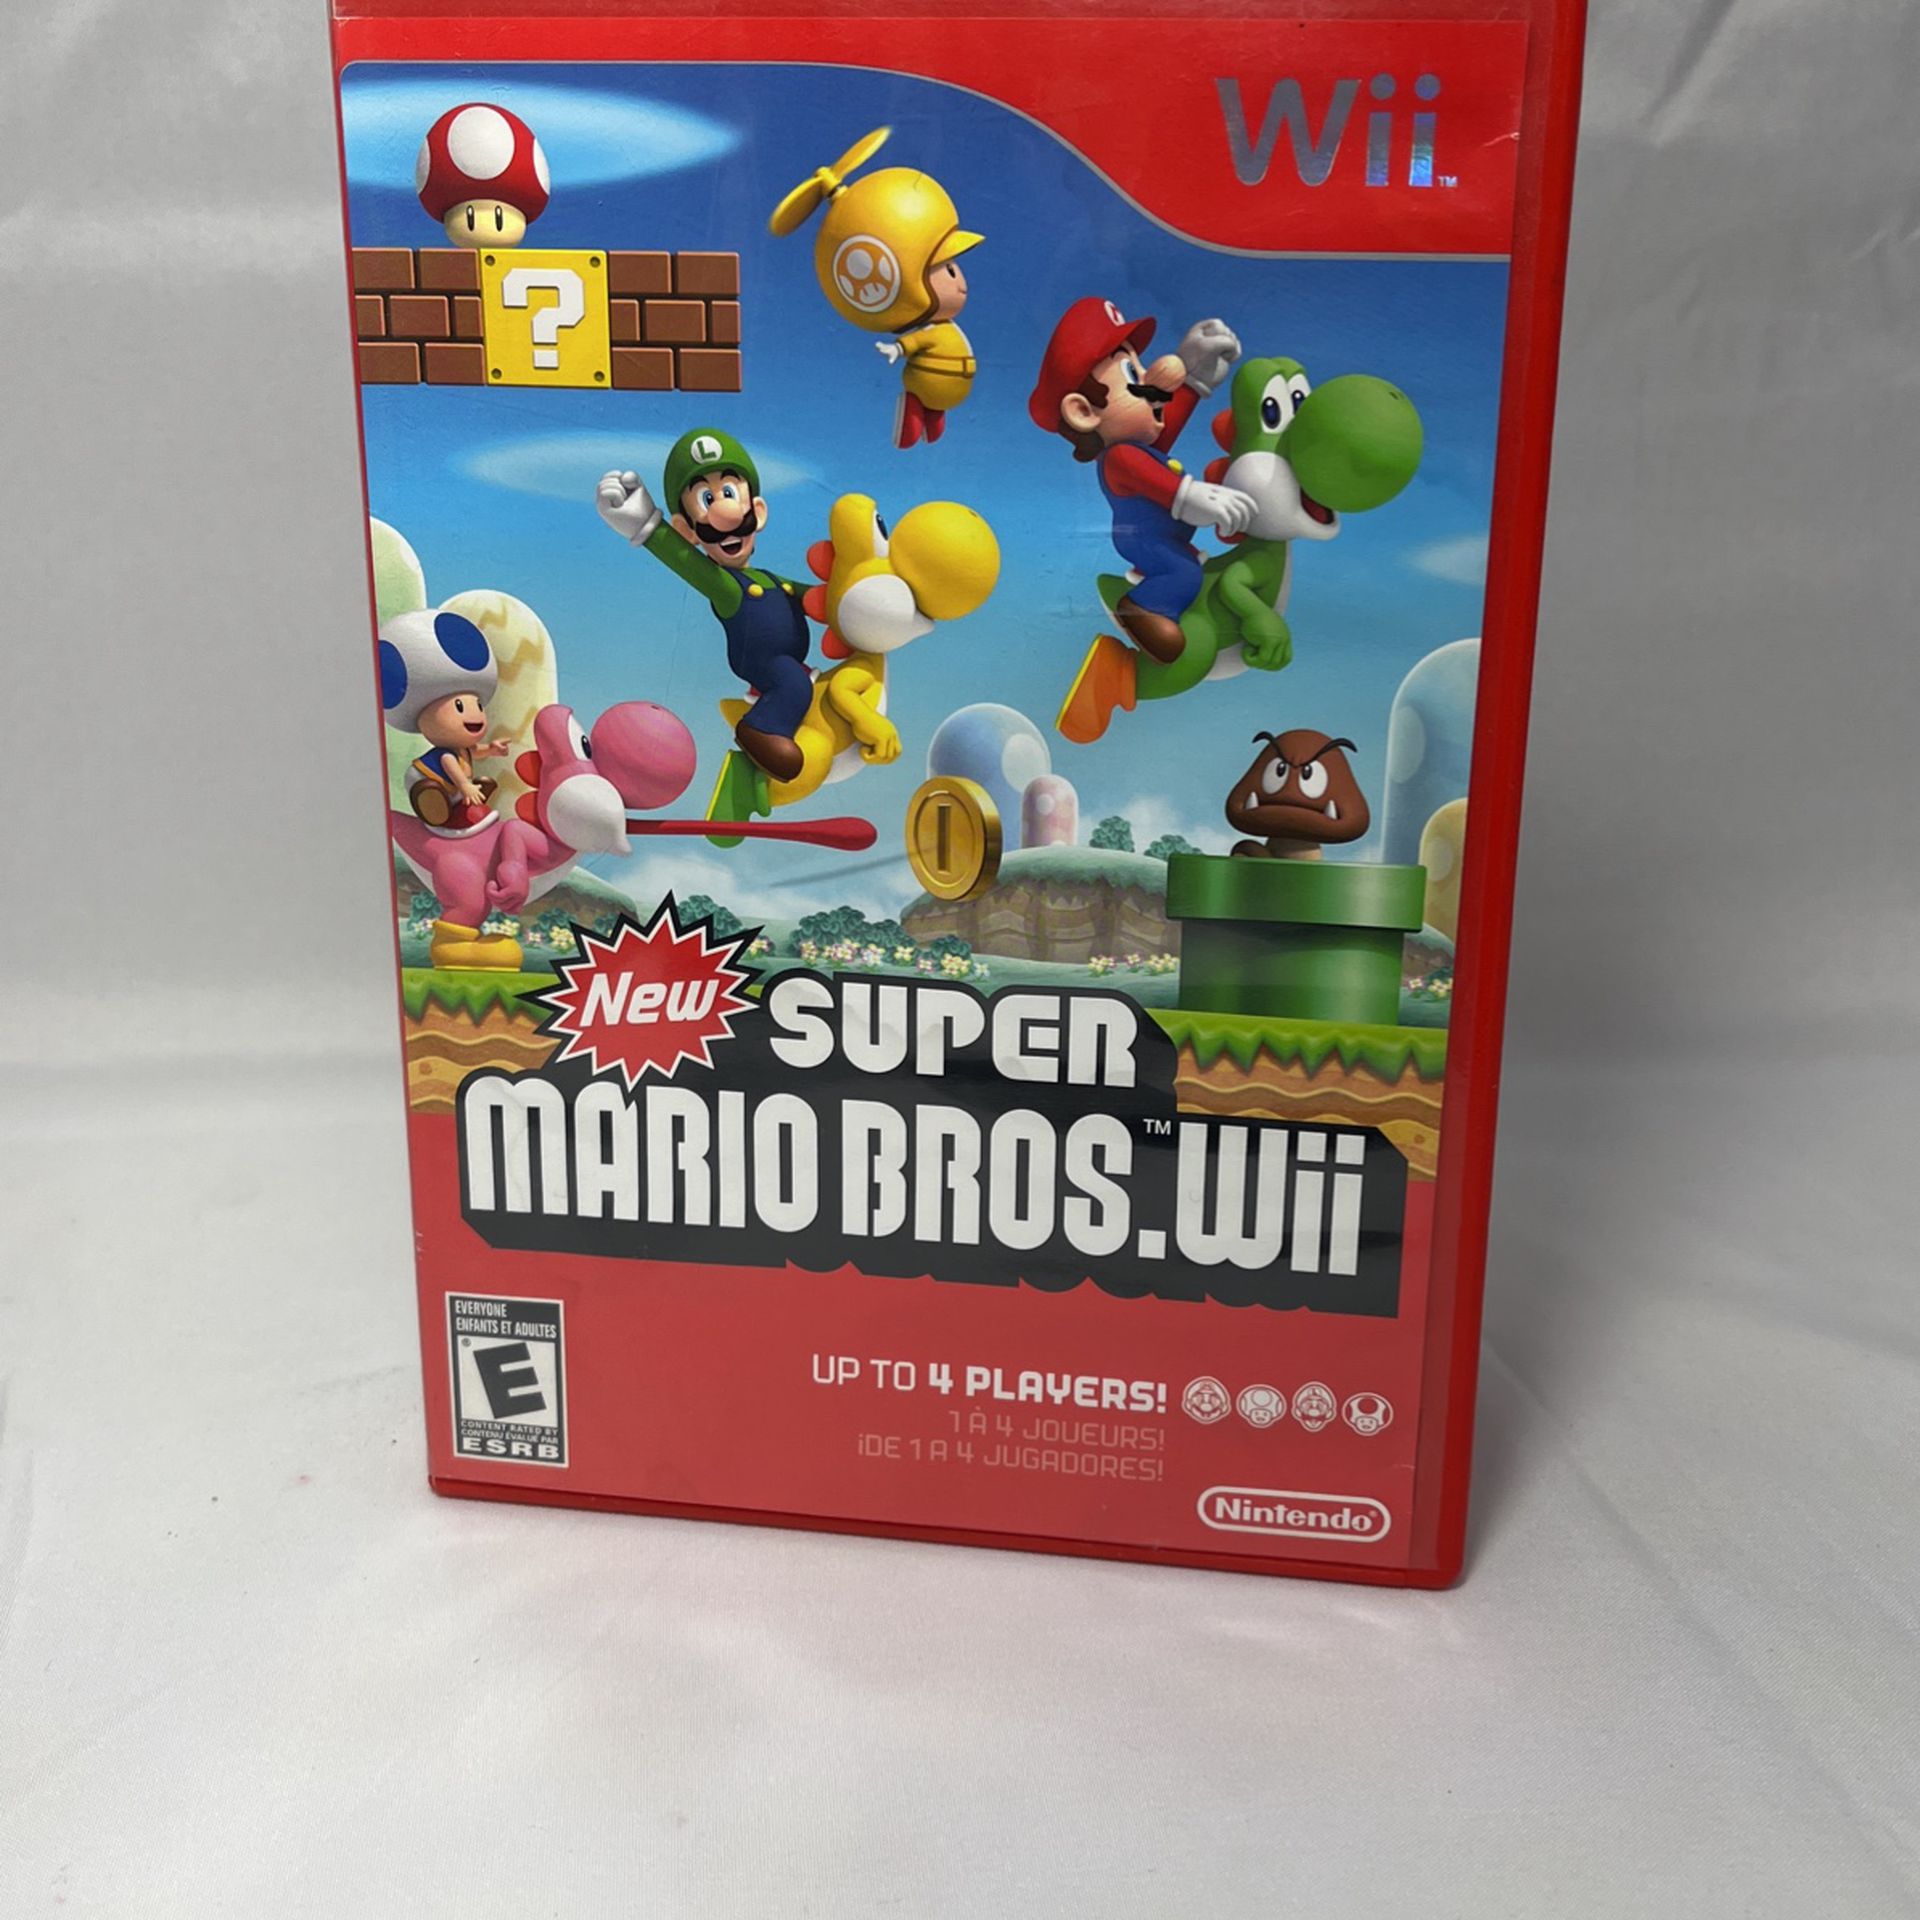 Nintendo Wii “New Super Mario Bros. Wii 